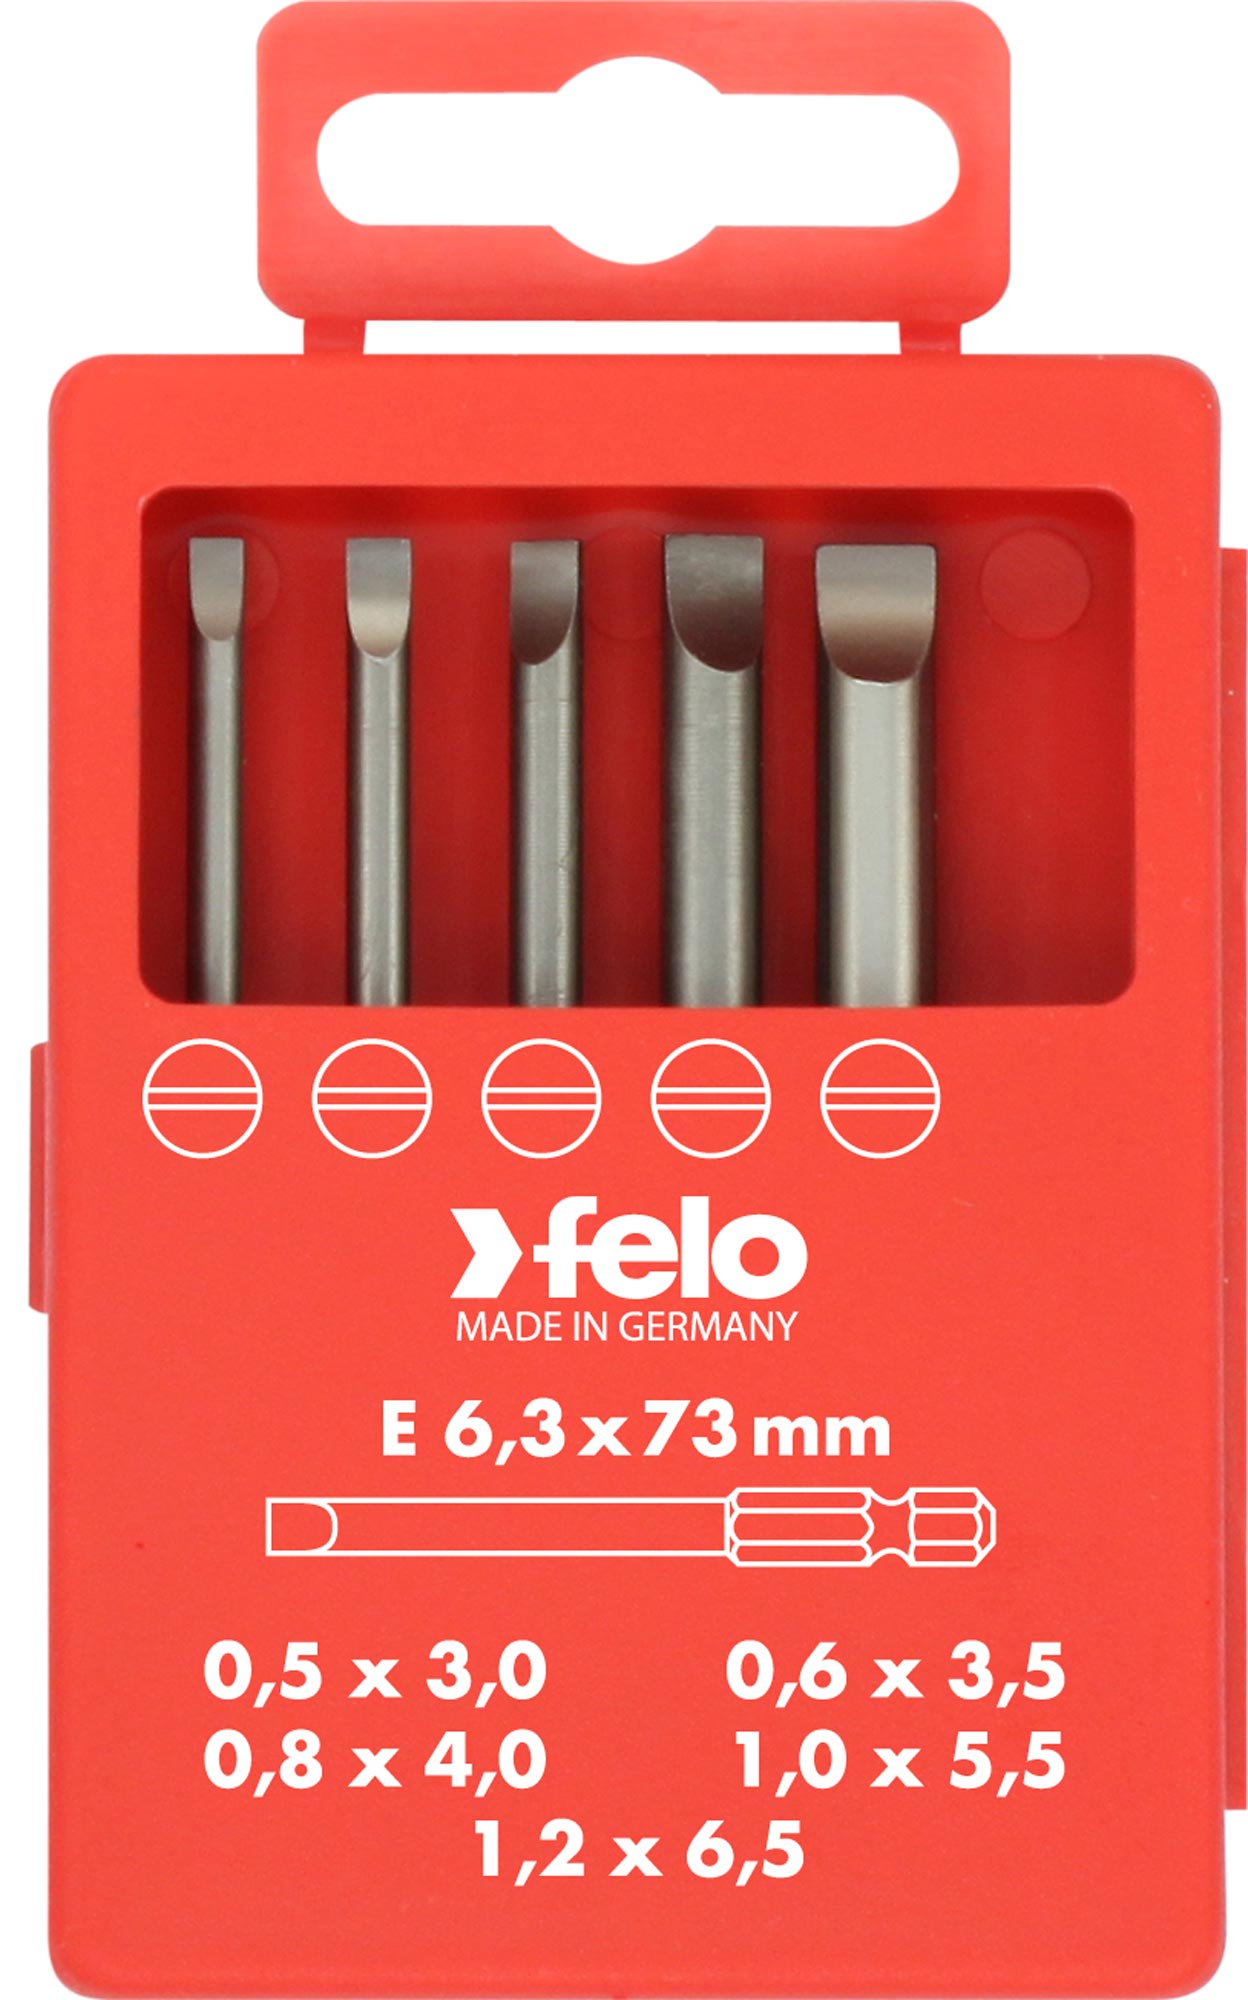 Felo Profi Bit-Box 5-teilig Industrie E 6,3 x 73 mm Schlitz SL Bit Set - SL 3,0 | SL 3,5 | SL 4,0 | SL 5,5 | SL 6,5 (FL-03091716) Bild-01